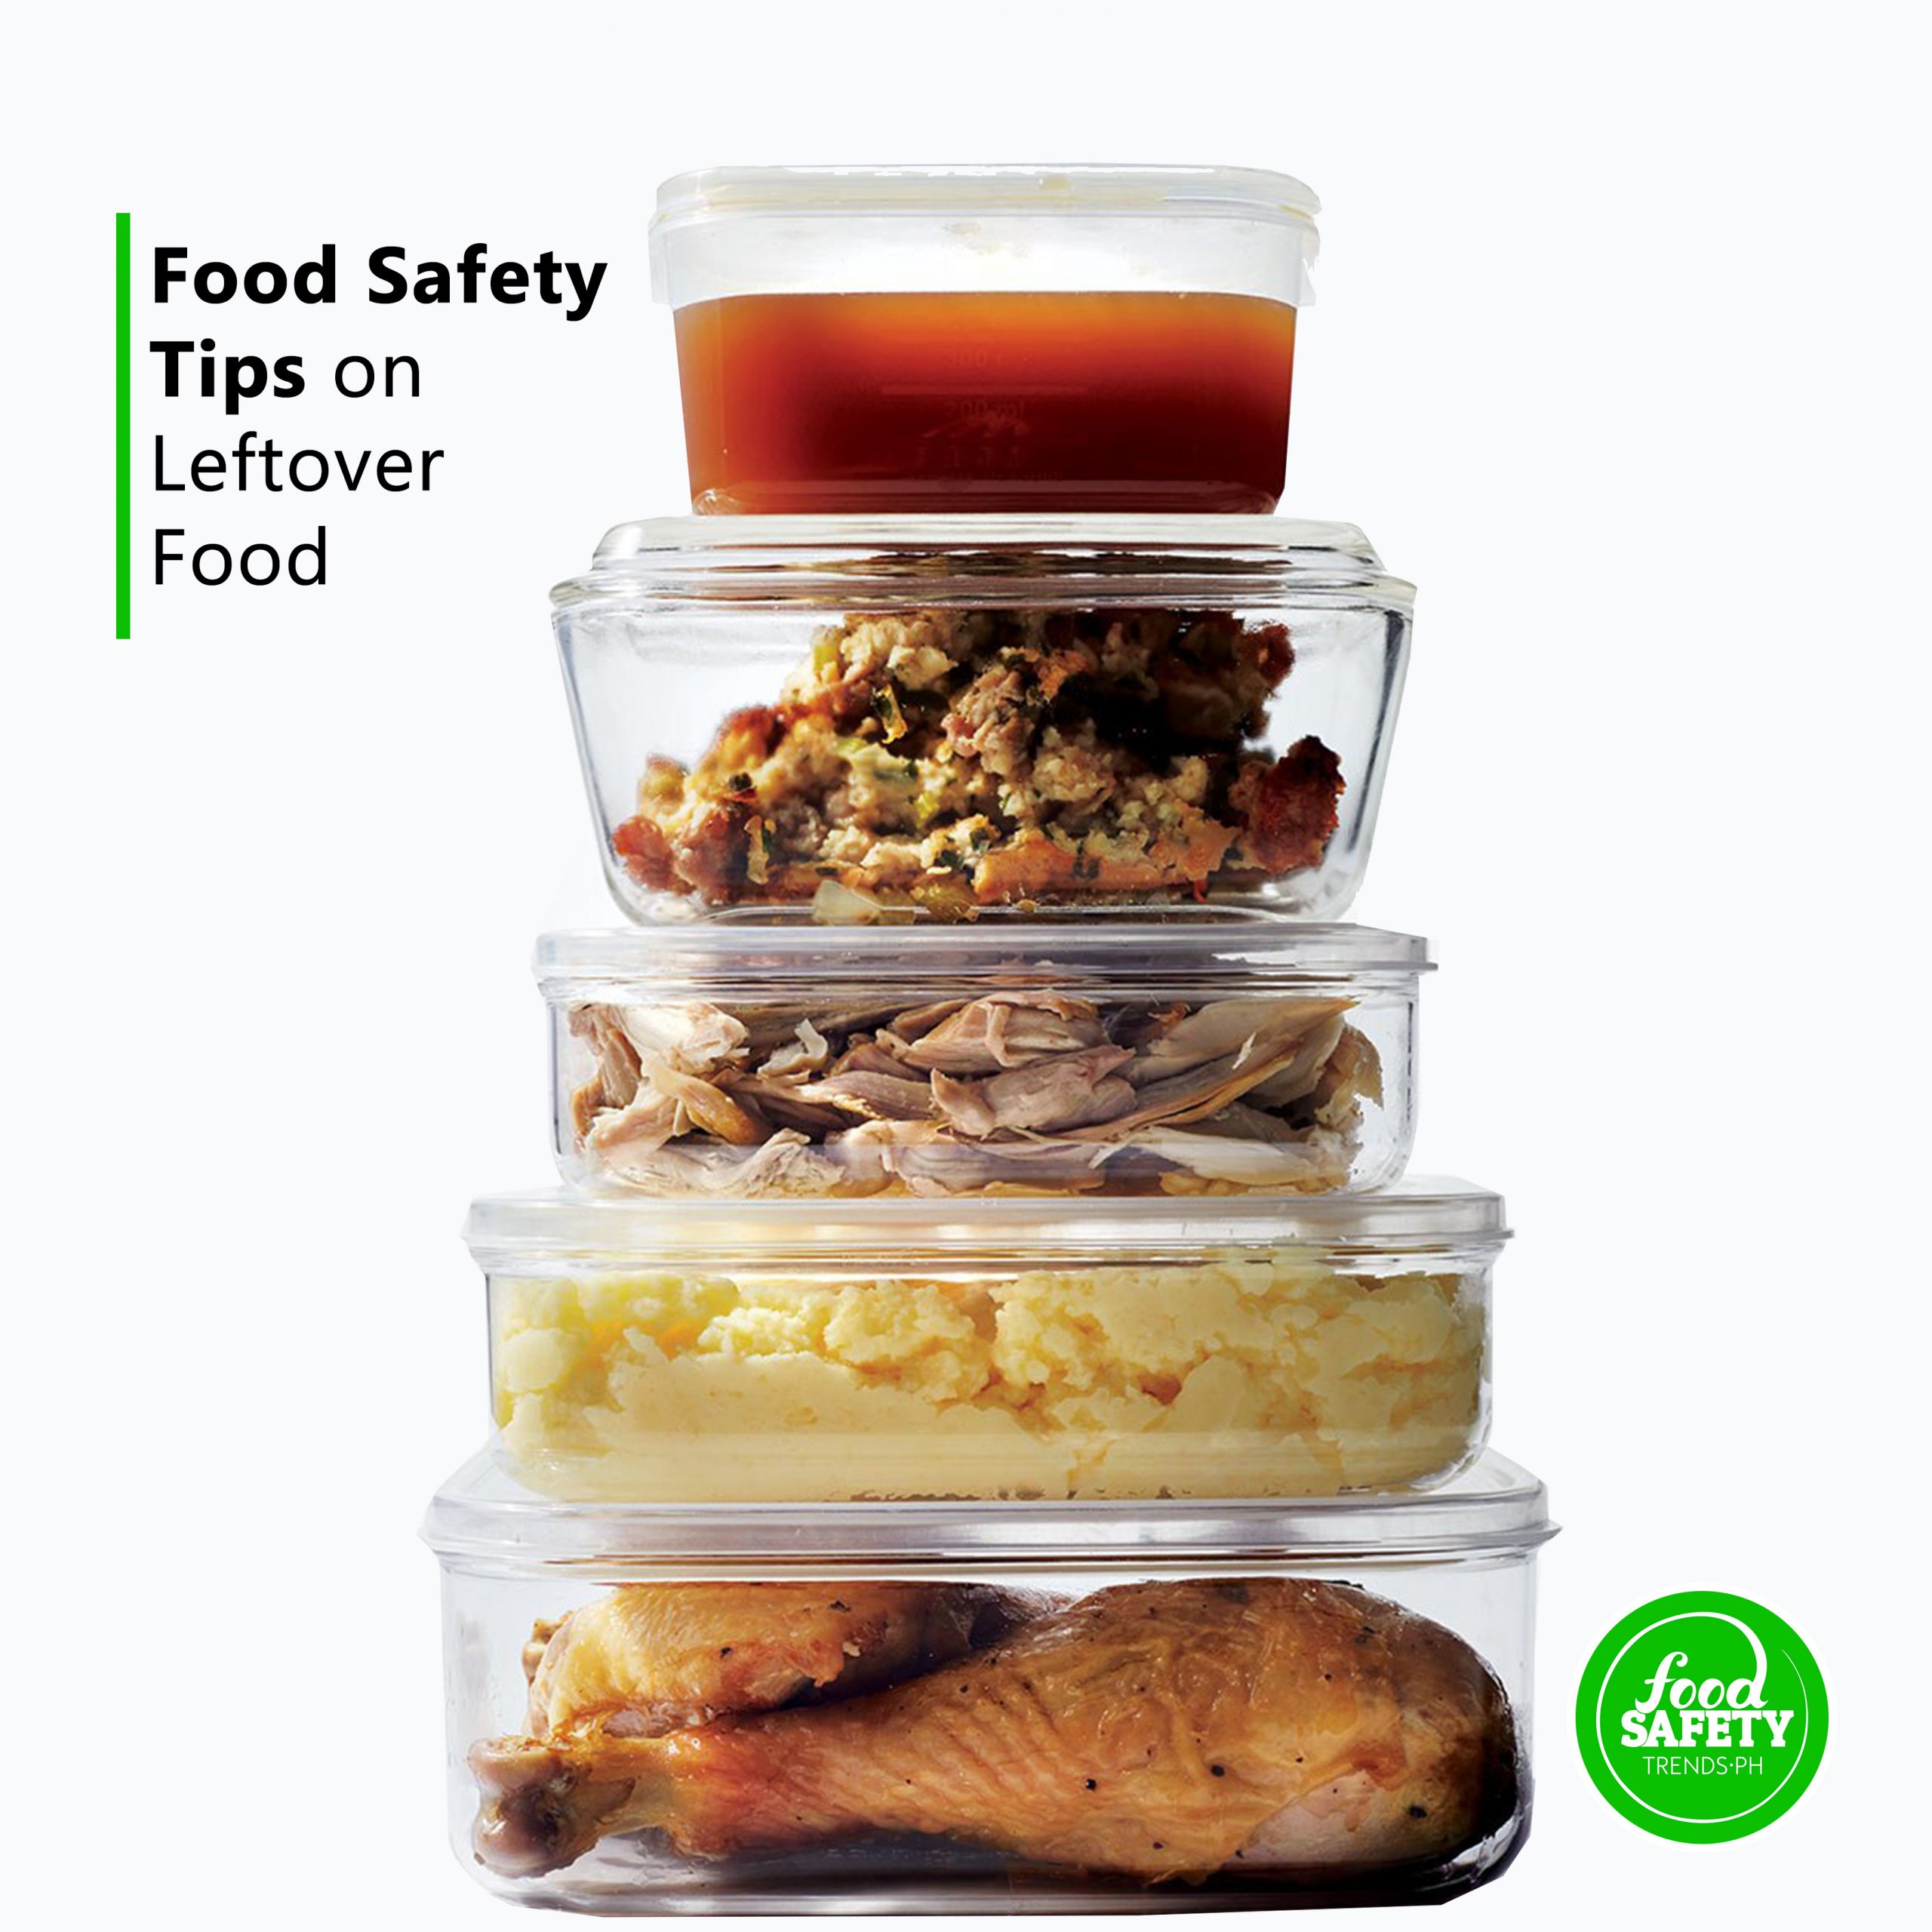 Food Safety Tips on Leftover Food